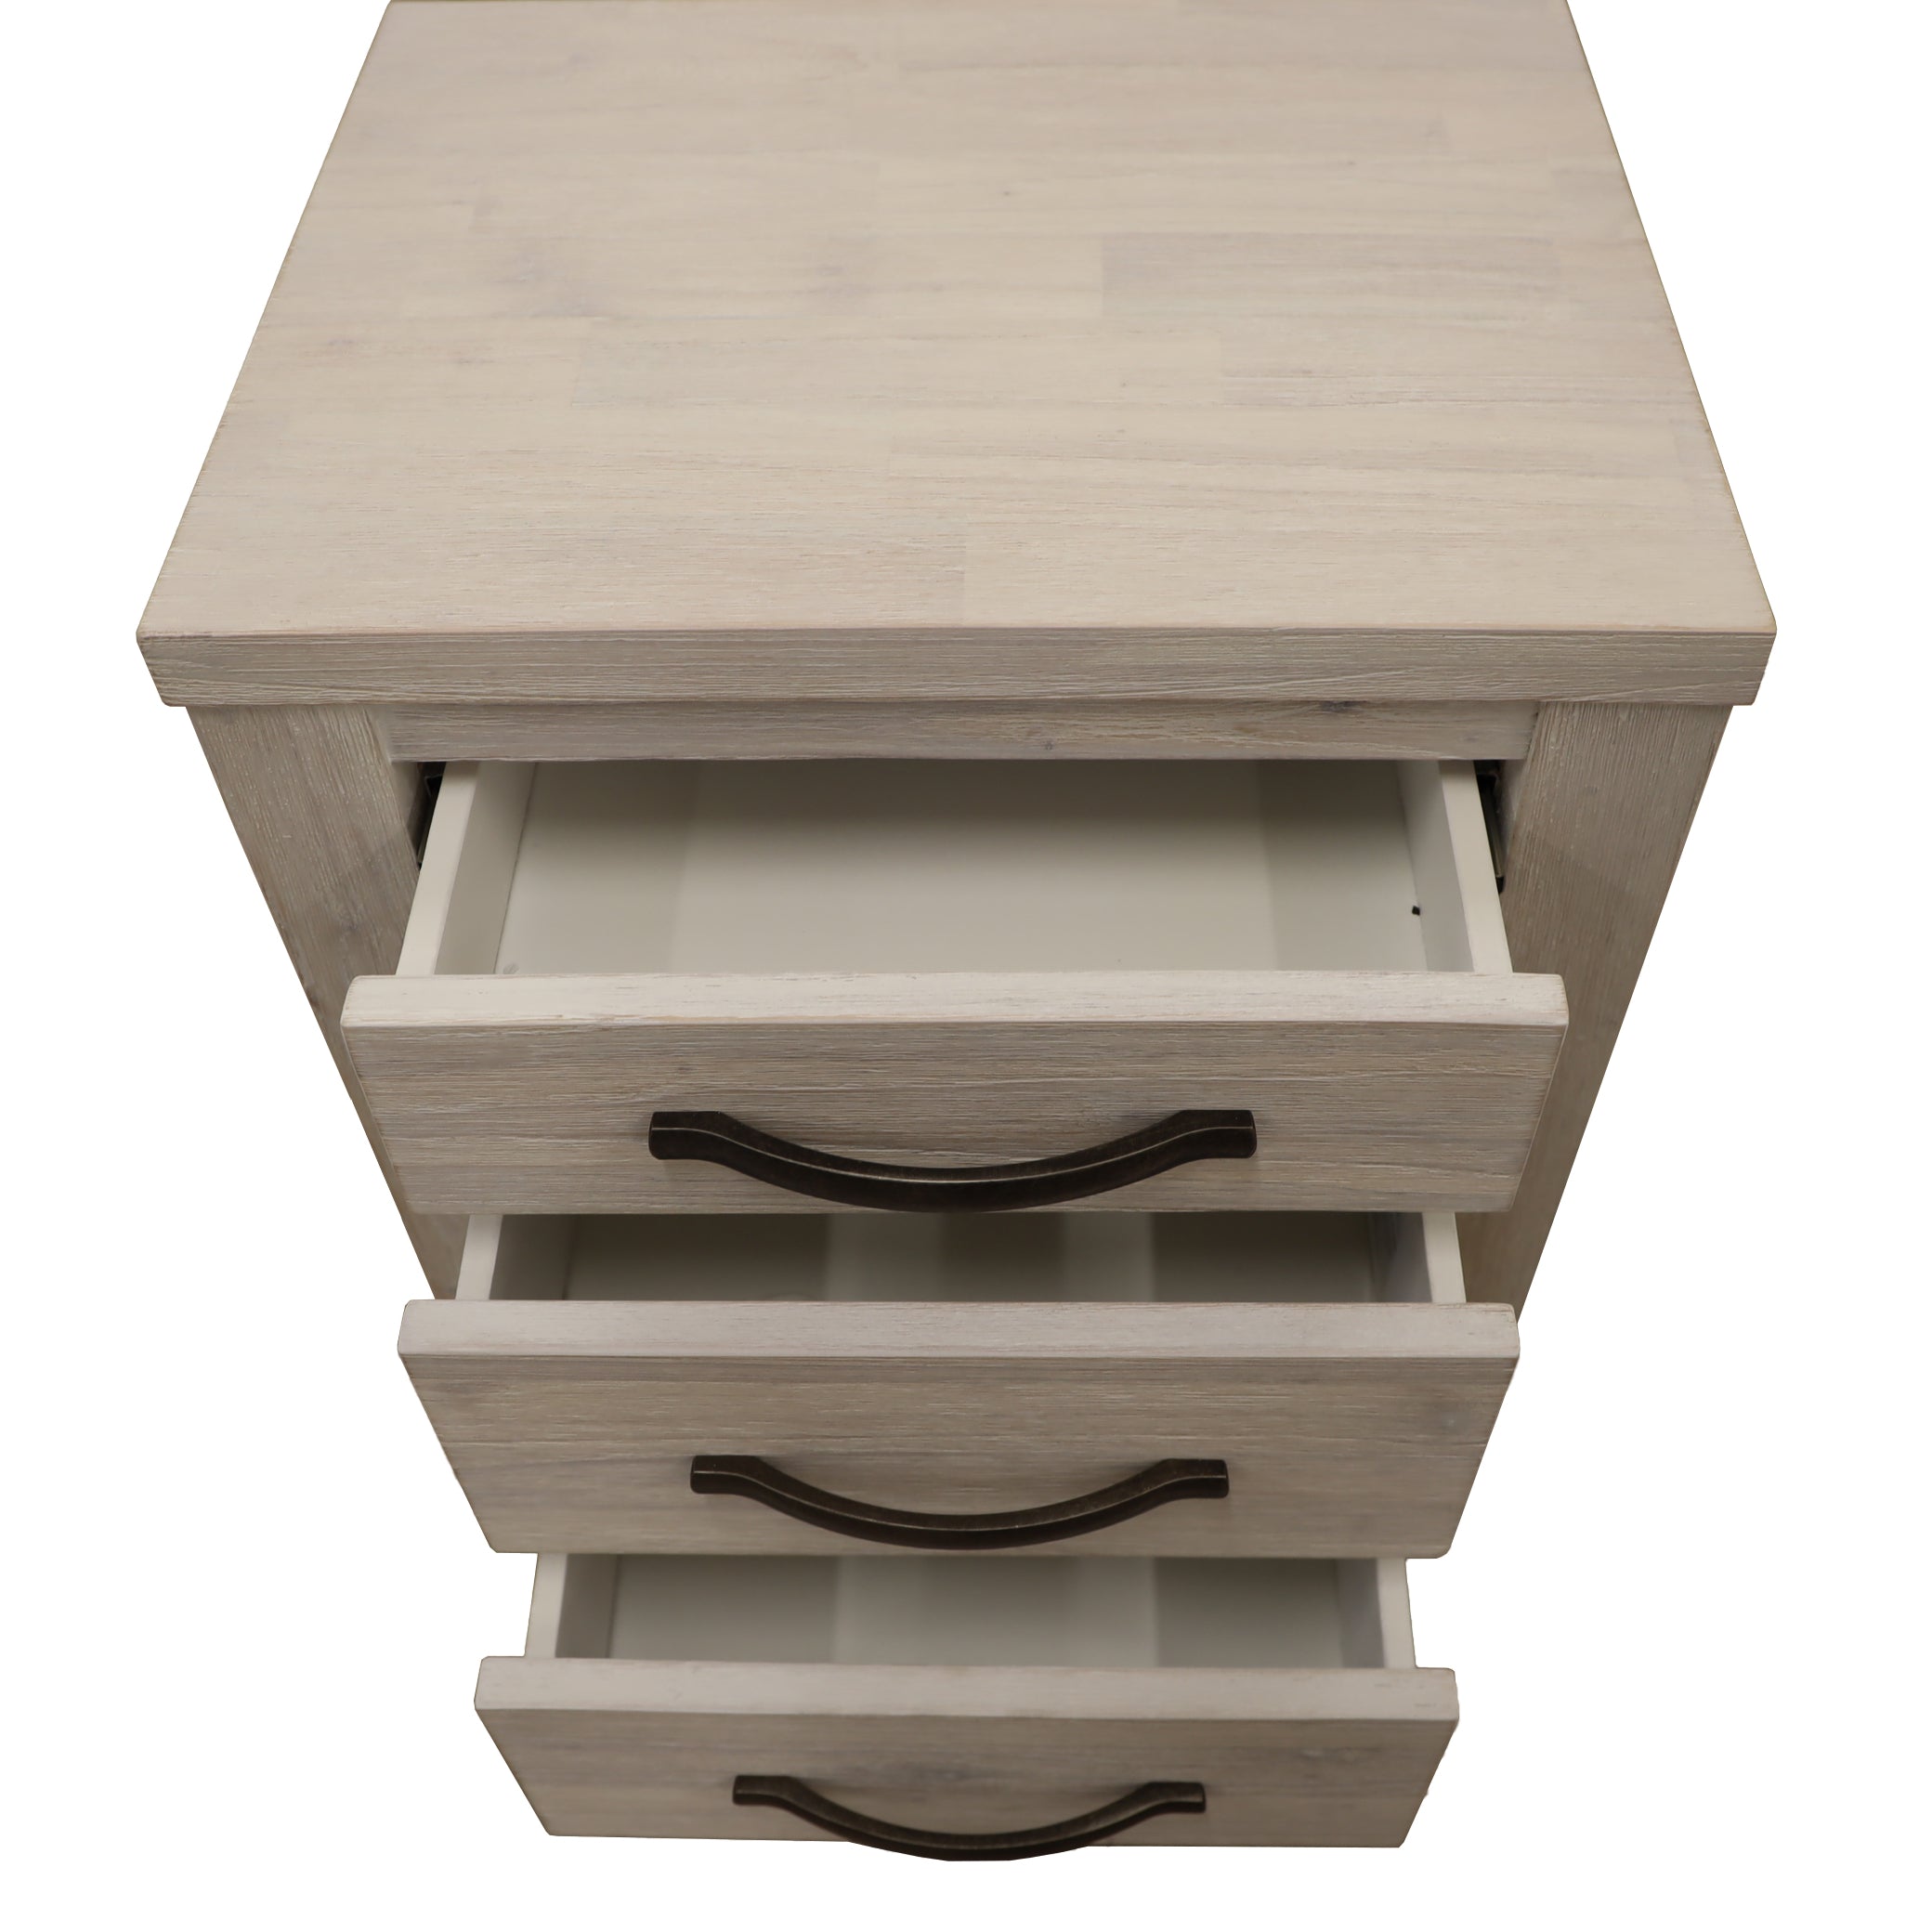 Bedside Tables 3 Drawers Storage Cabinet Shelf Side End Table - White